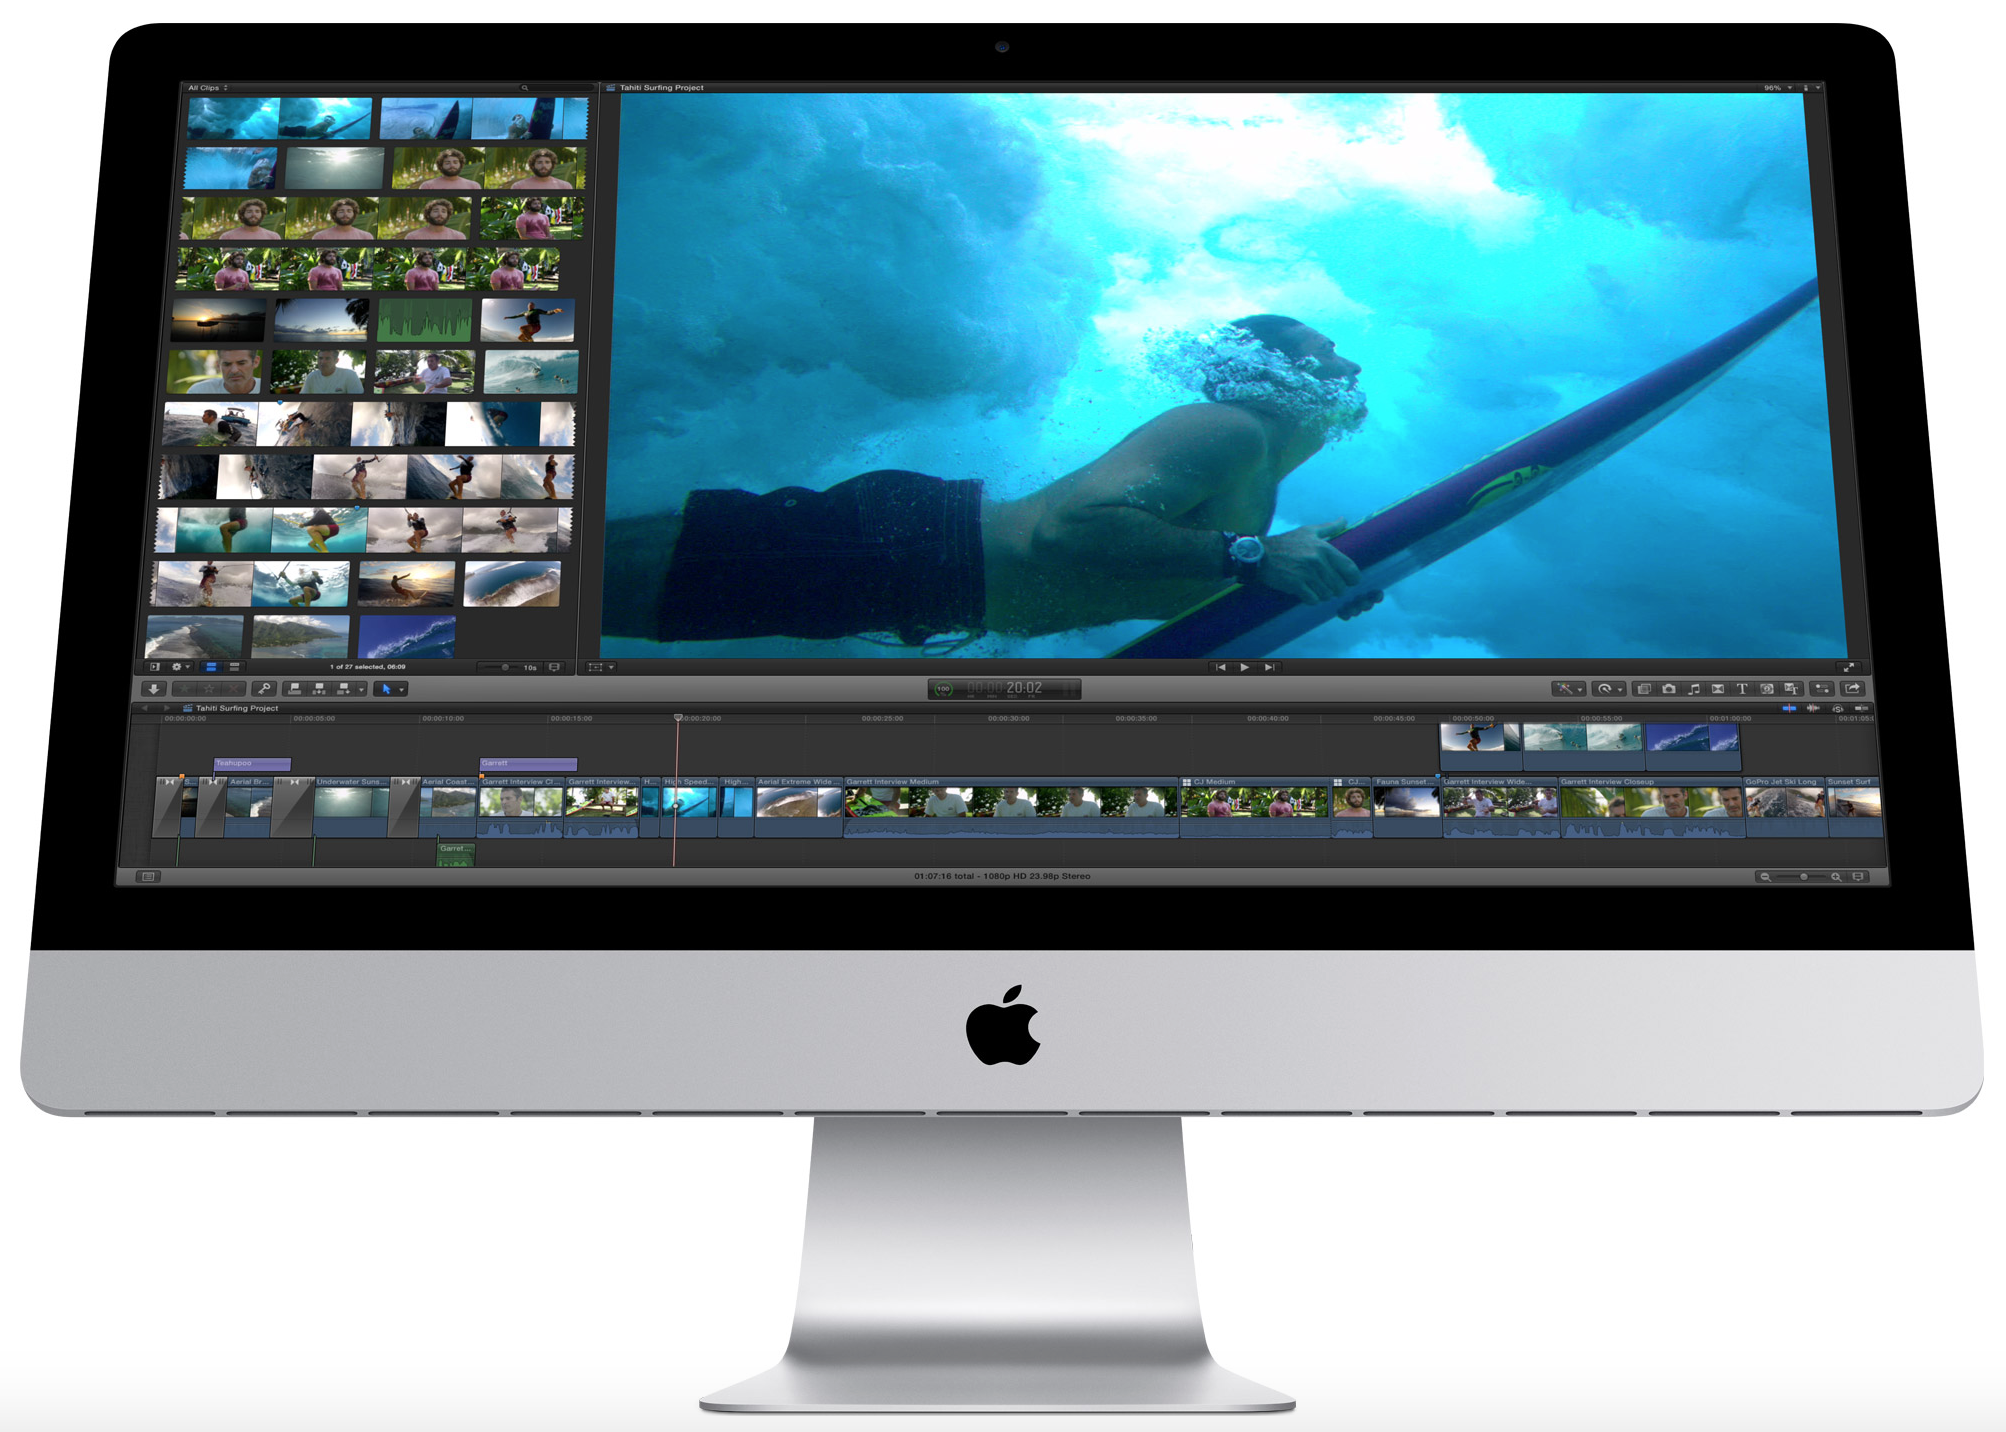 screenshot 2014 09 29 09 40 30 - Apple unveils a 27" iMac with a 5K Retina Display